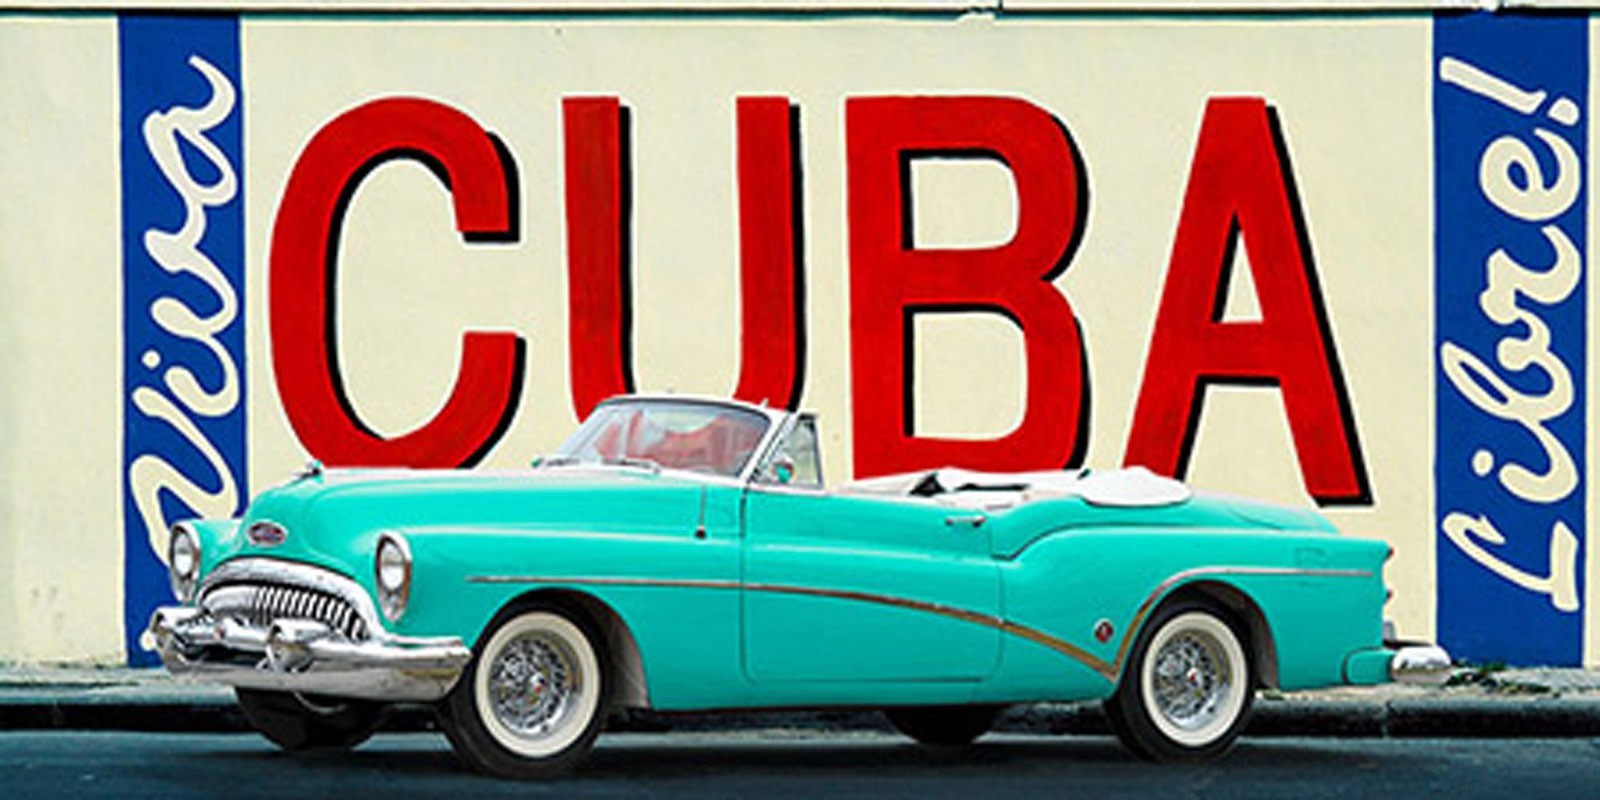 Gasoline Images - Cuba Libre, Havana